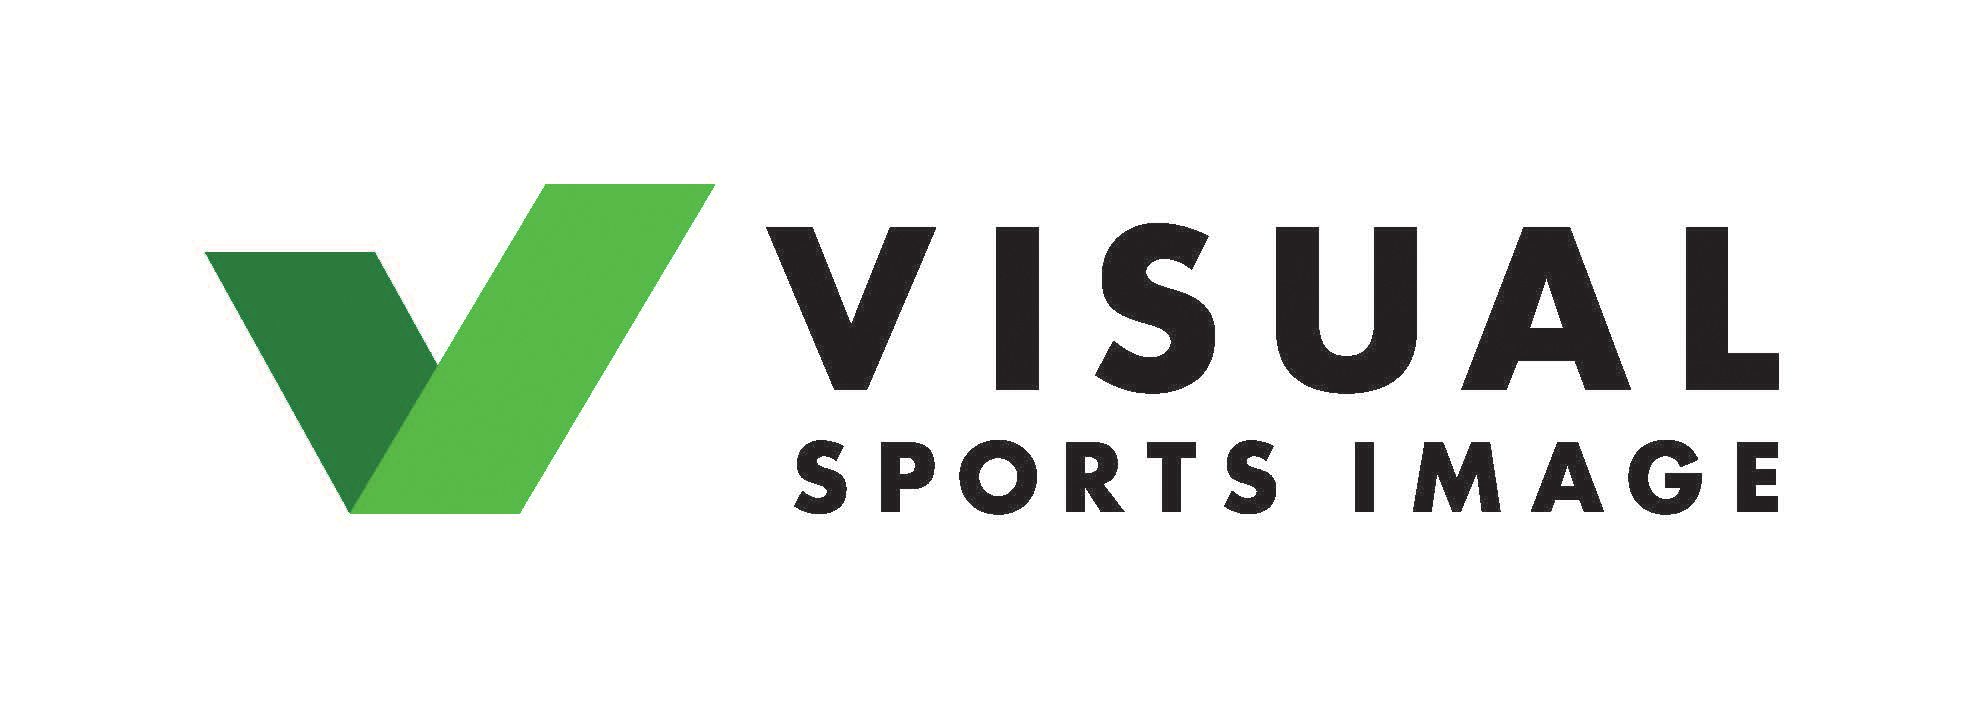 Visual Sports Image Logo